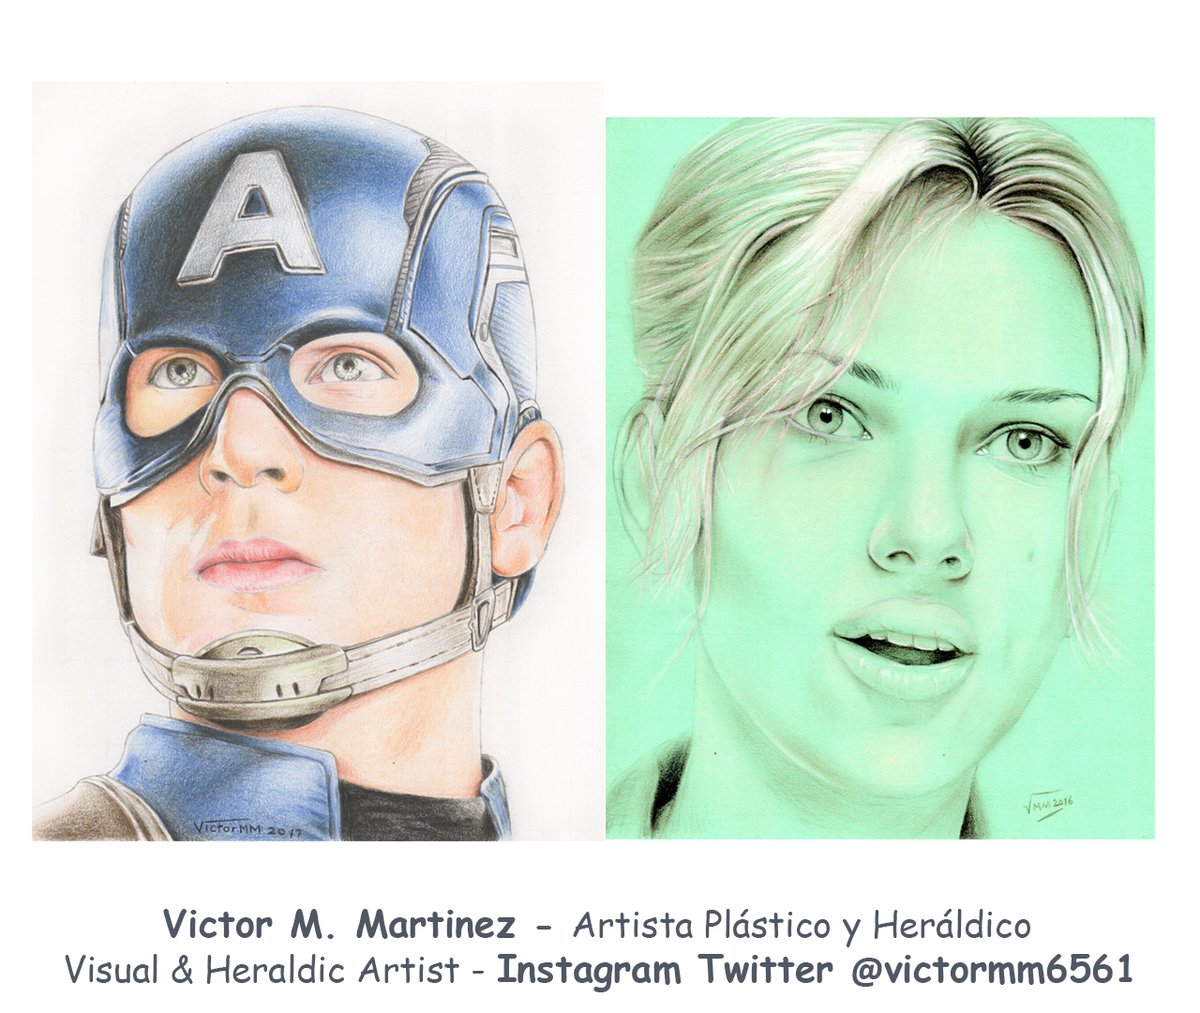 Chris Evans como Capitán América, #ChrisEvans as #CaptainAmerica, Scarlett Johansson #ScarlettJohansson, retratos portraits por #Artista Plástico y Heráldico, Victor M. Martinez, #drawing #dibujo 28x22 cms. #BlackWidow #Art #Marvel #ArtForSale #Arte #MarvelStudios #Venezuela